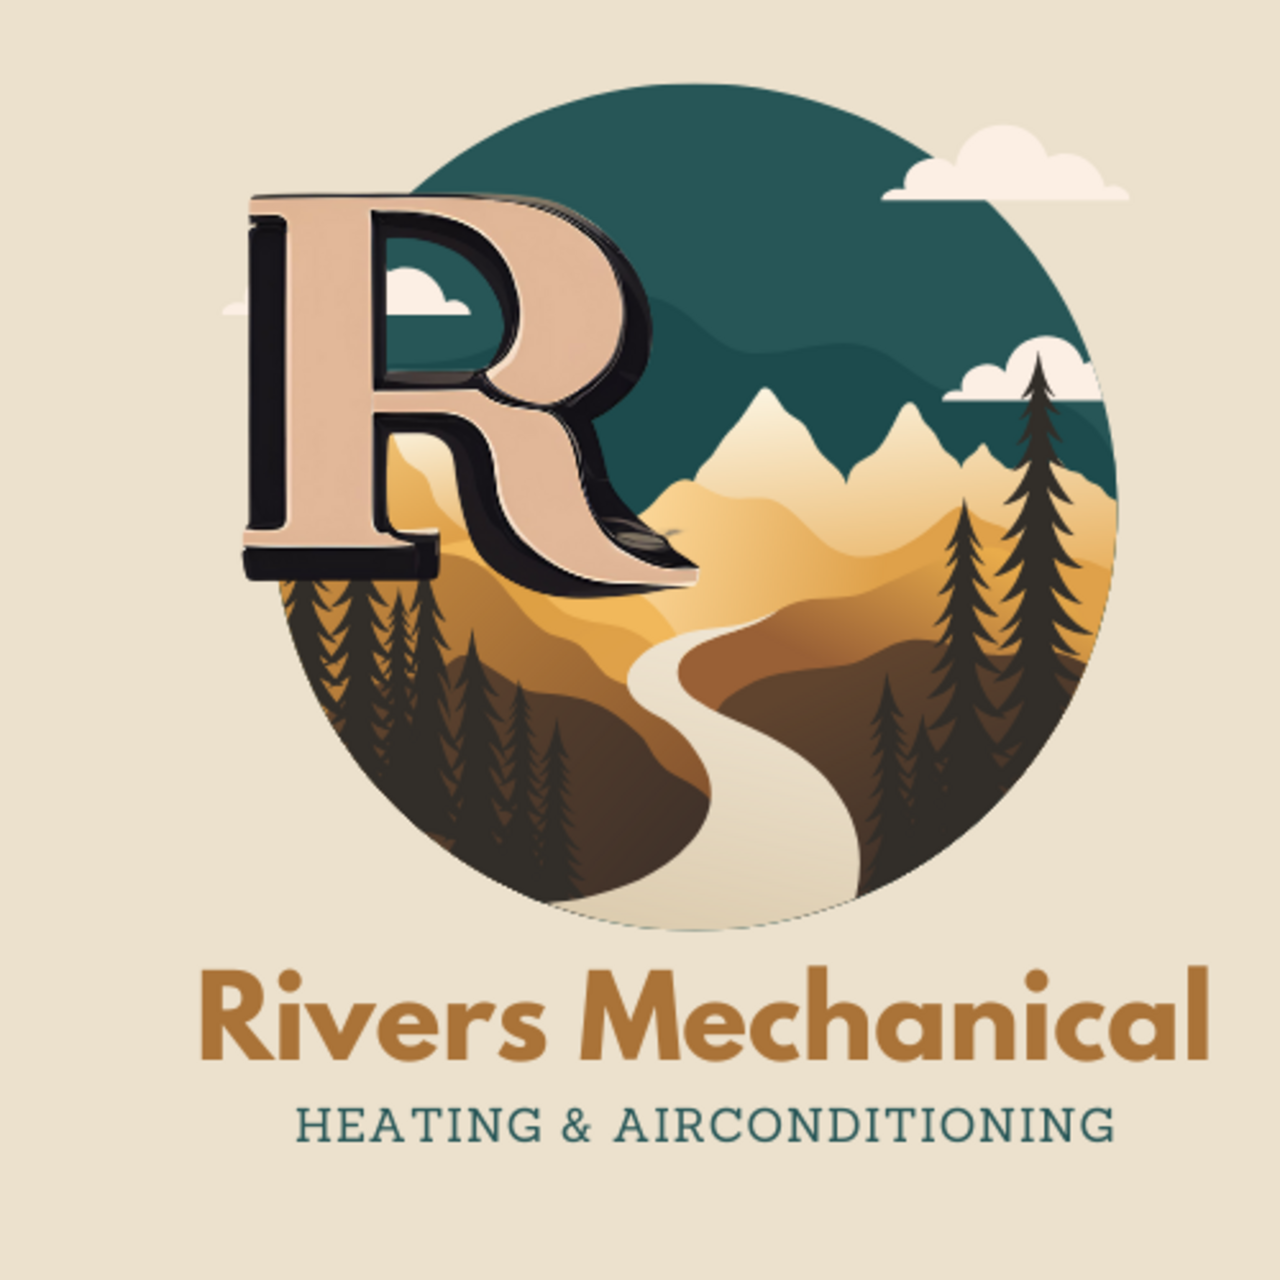 Rivers mechanical inc's logo